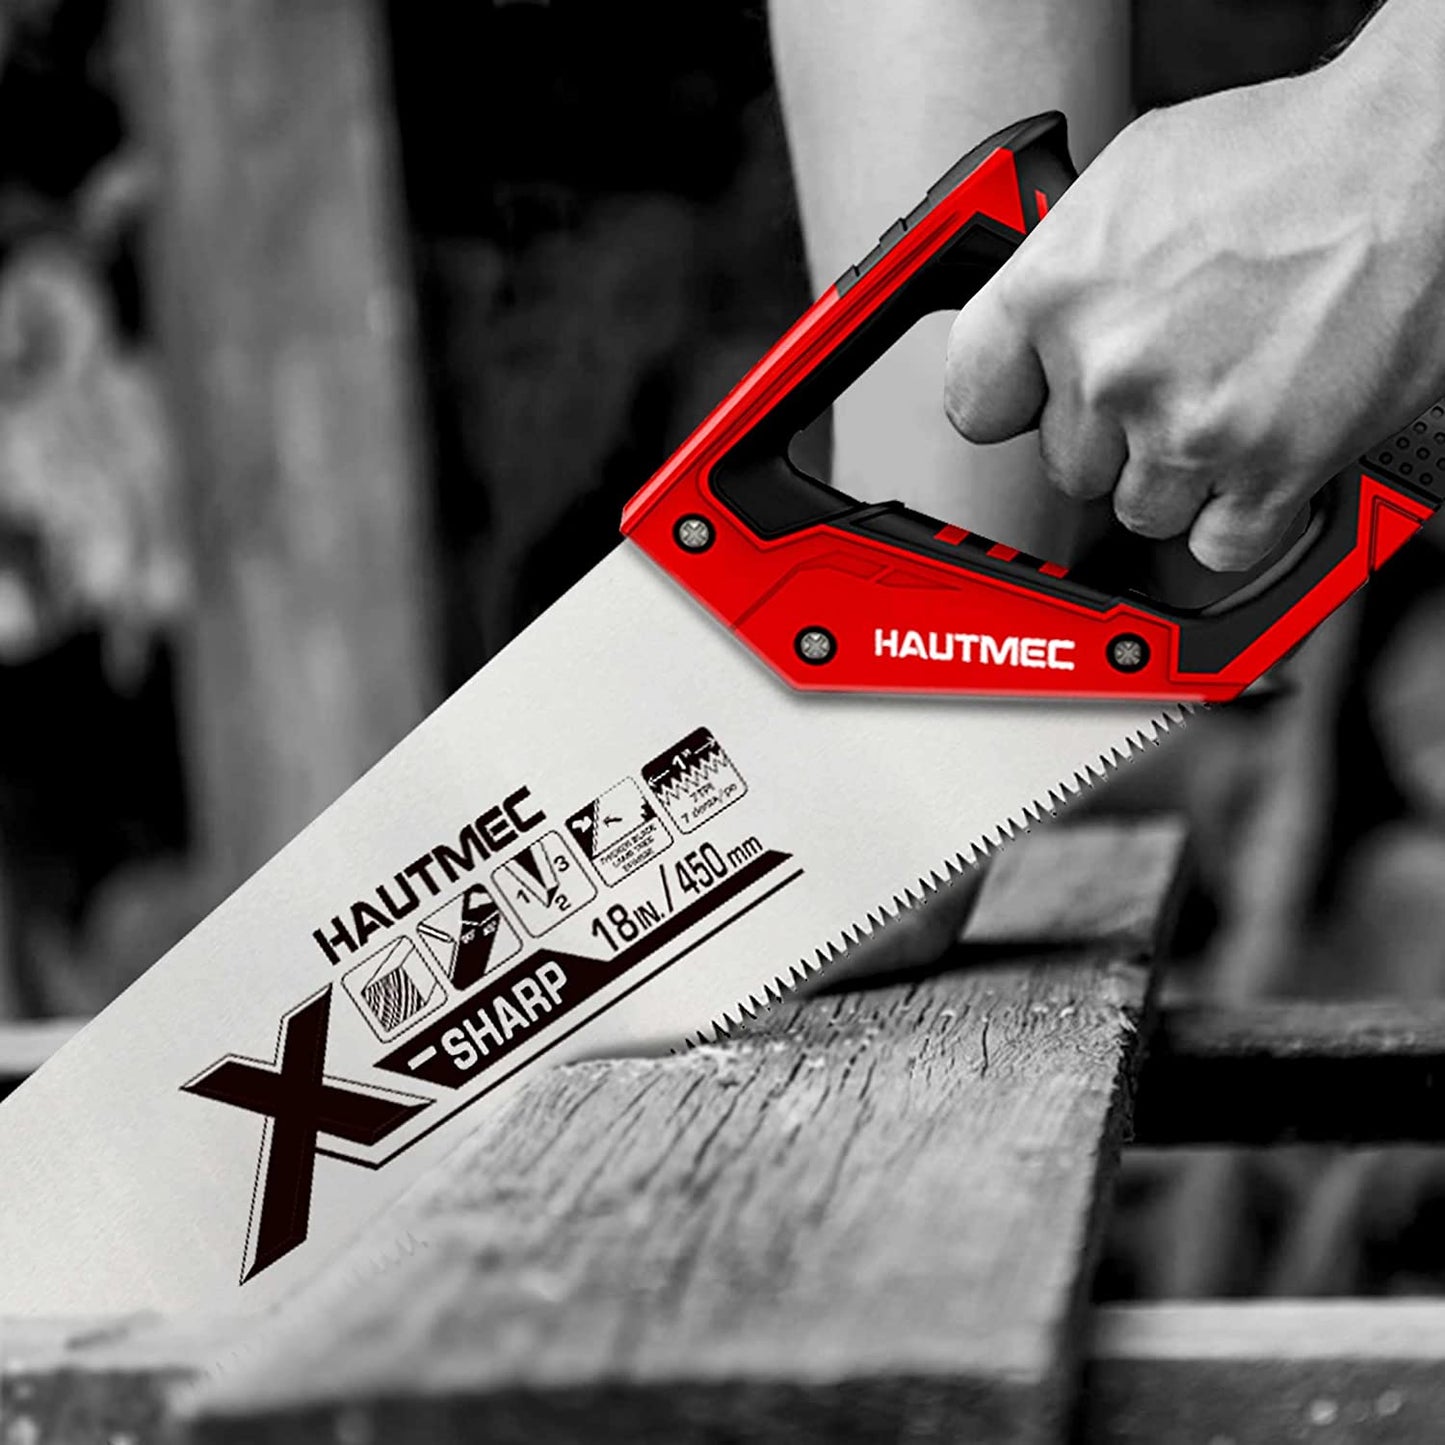 HAUTMEC X-Sharp 18 in. Universal Hand Saw - 7 TPI Universal Cuts Wood Saw - Professional Universal Saws for Wood, Laminate And Plastic - Ripcut And Crosscut Saw, HT0151-SA